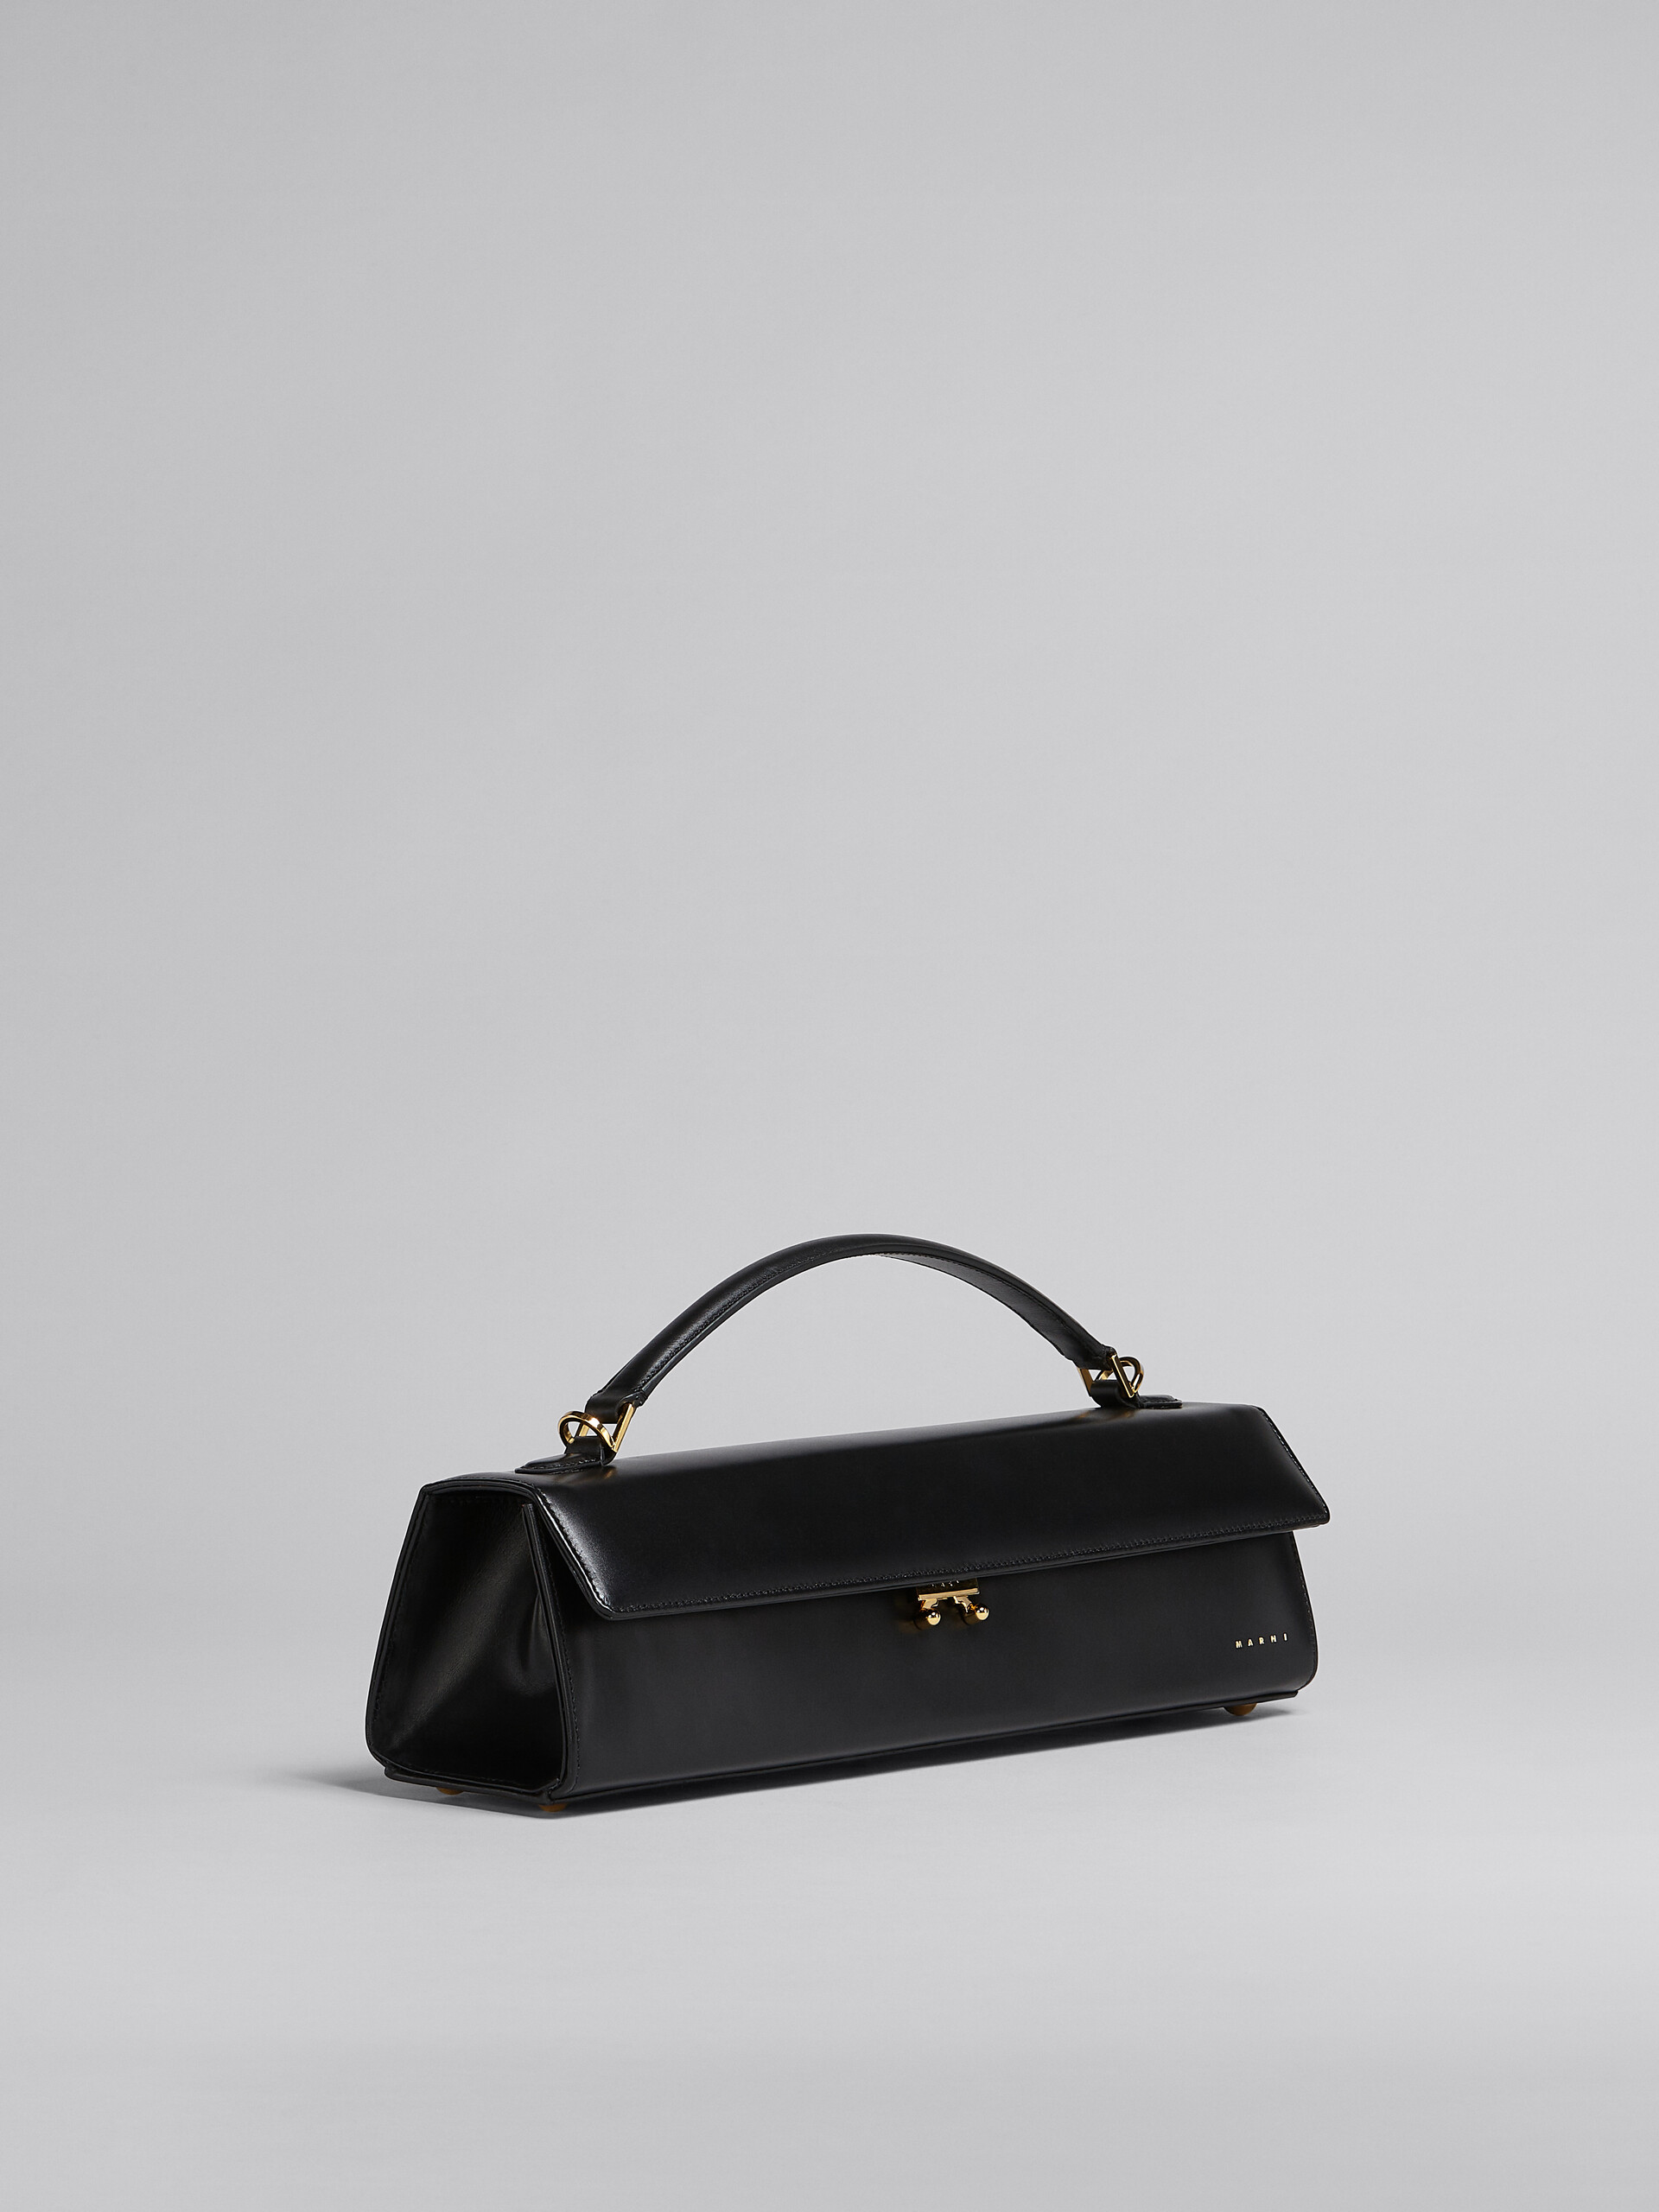 Relativity Large Bag in black leather - Handbag - Image 6